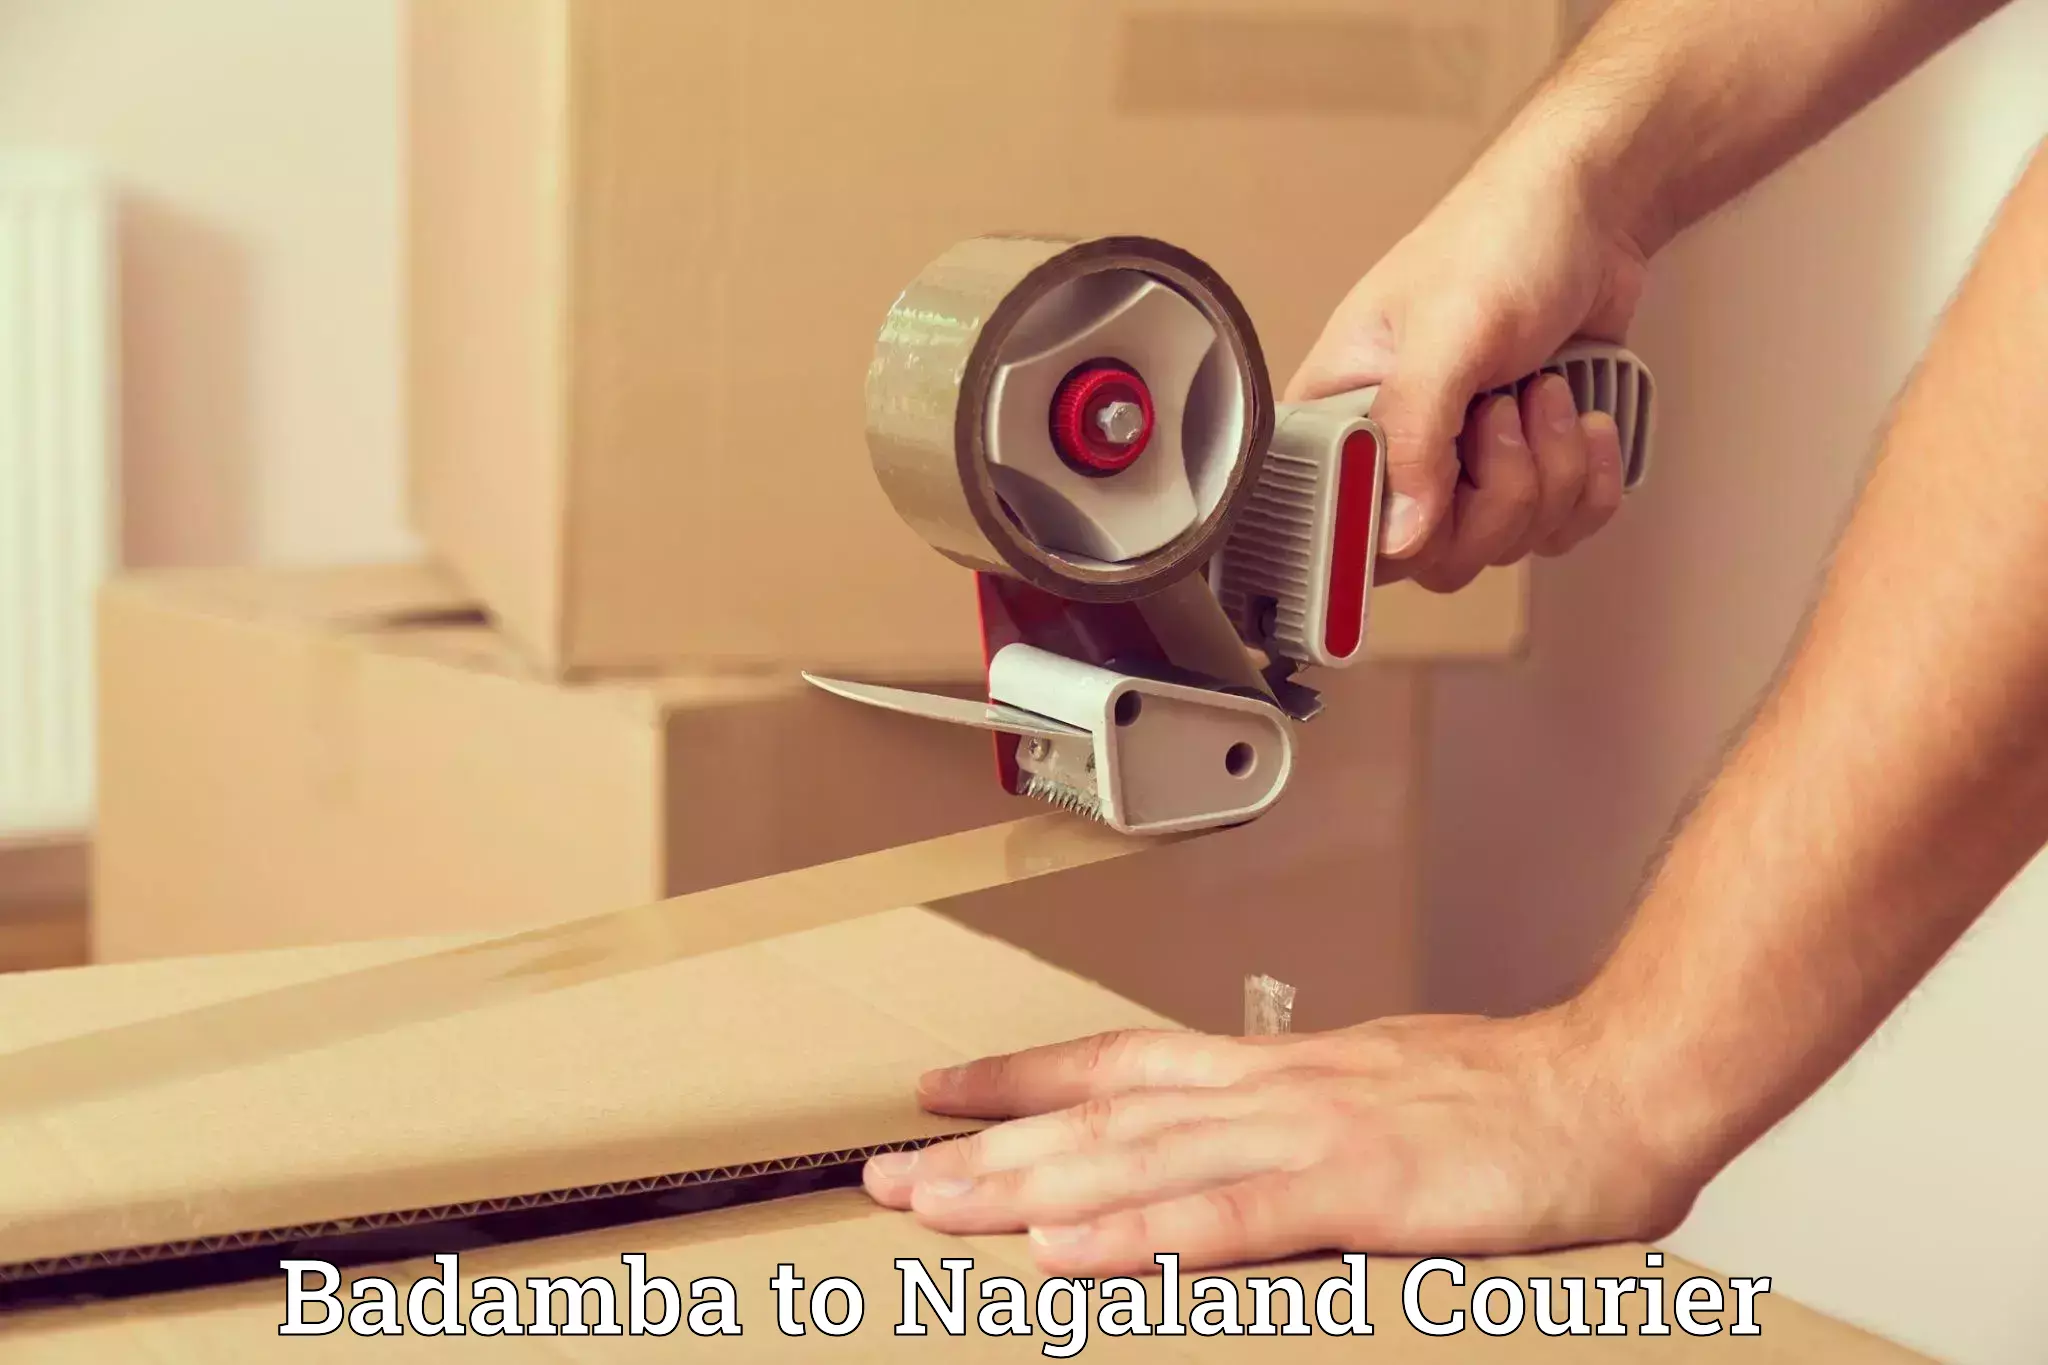 Quality moving and storage Badamba to Nagaland